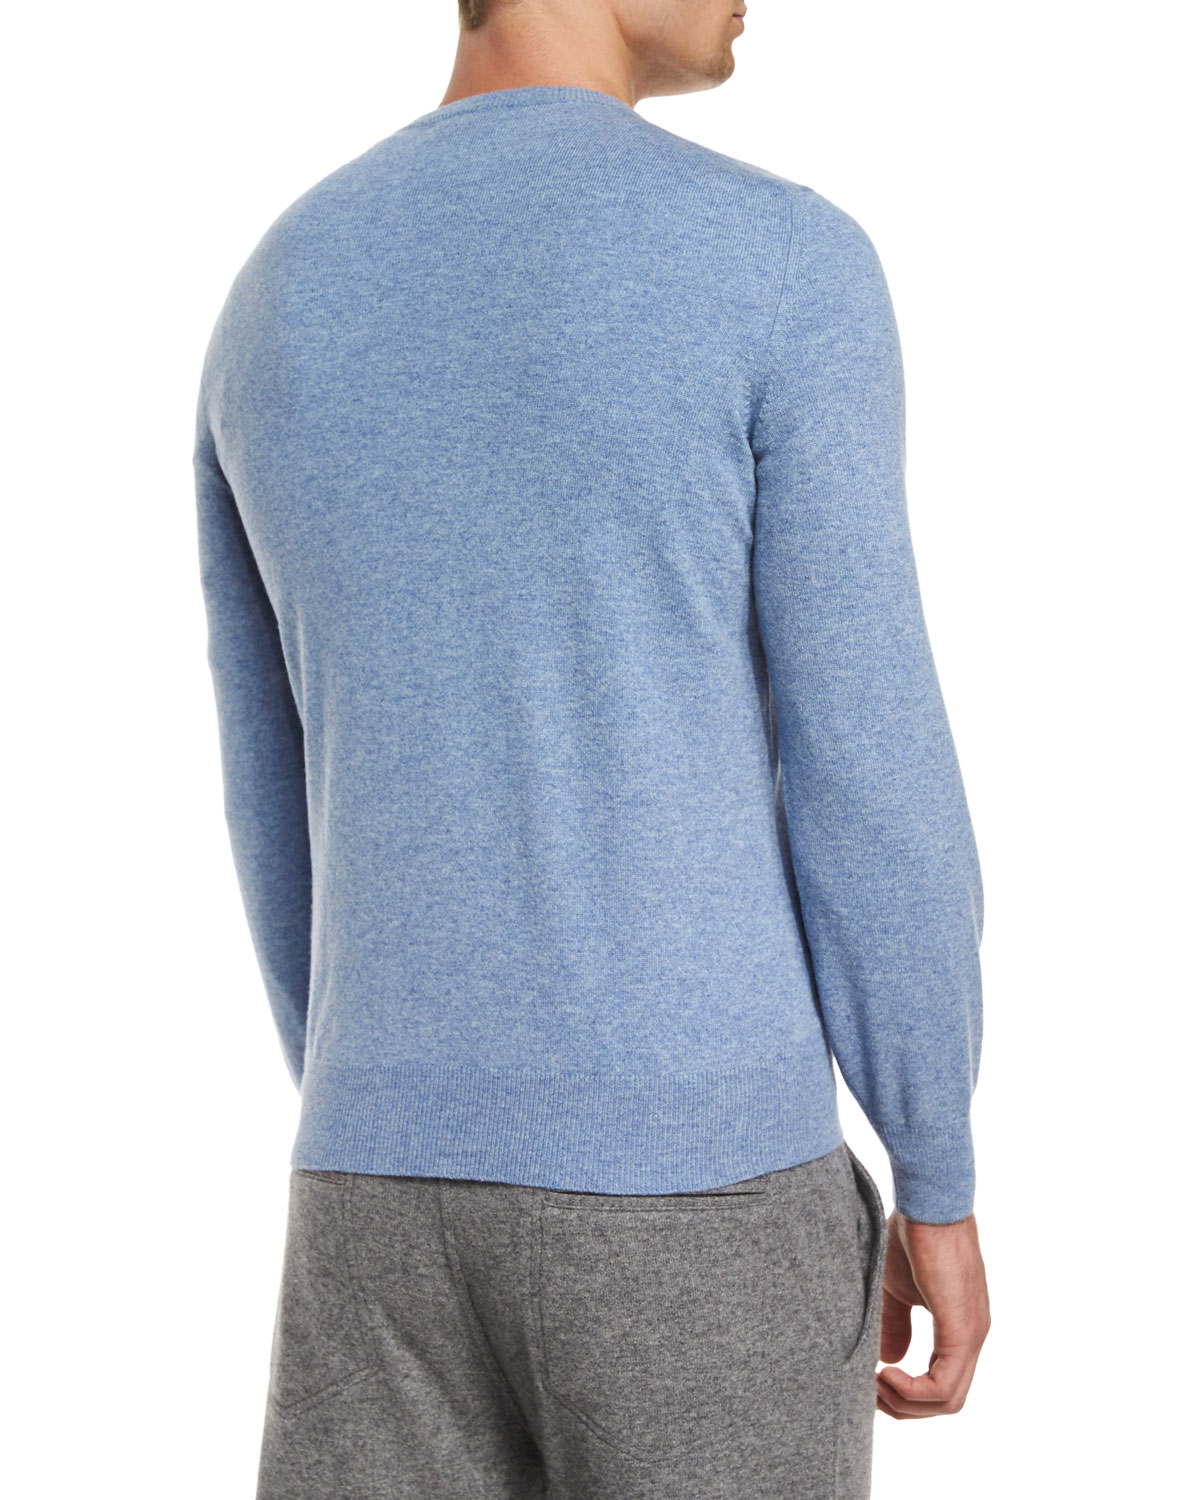 Brunello Cucinelli Cashmere V-neck Sweater in Blue for Men - Lyst